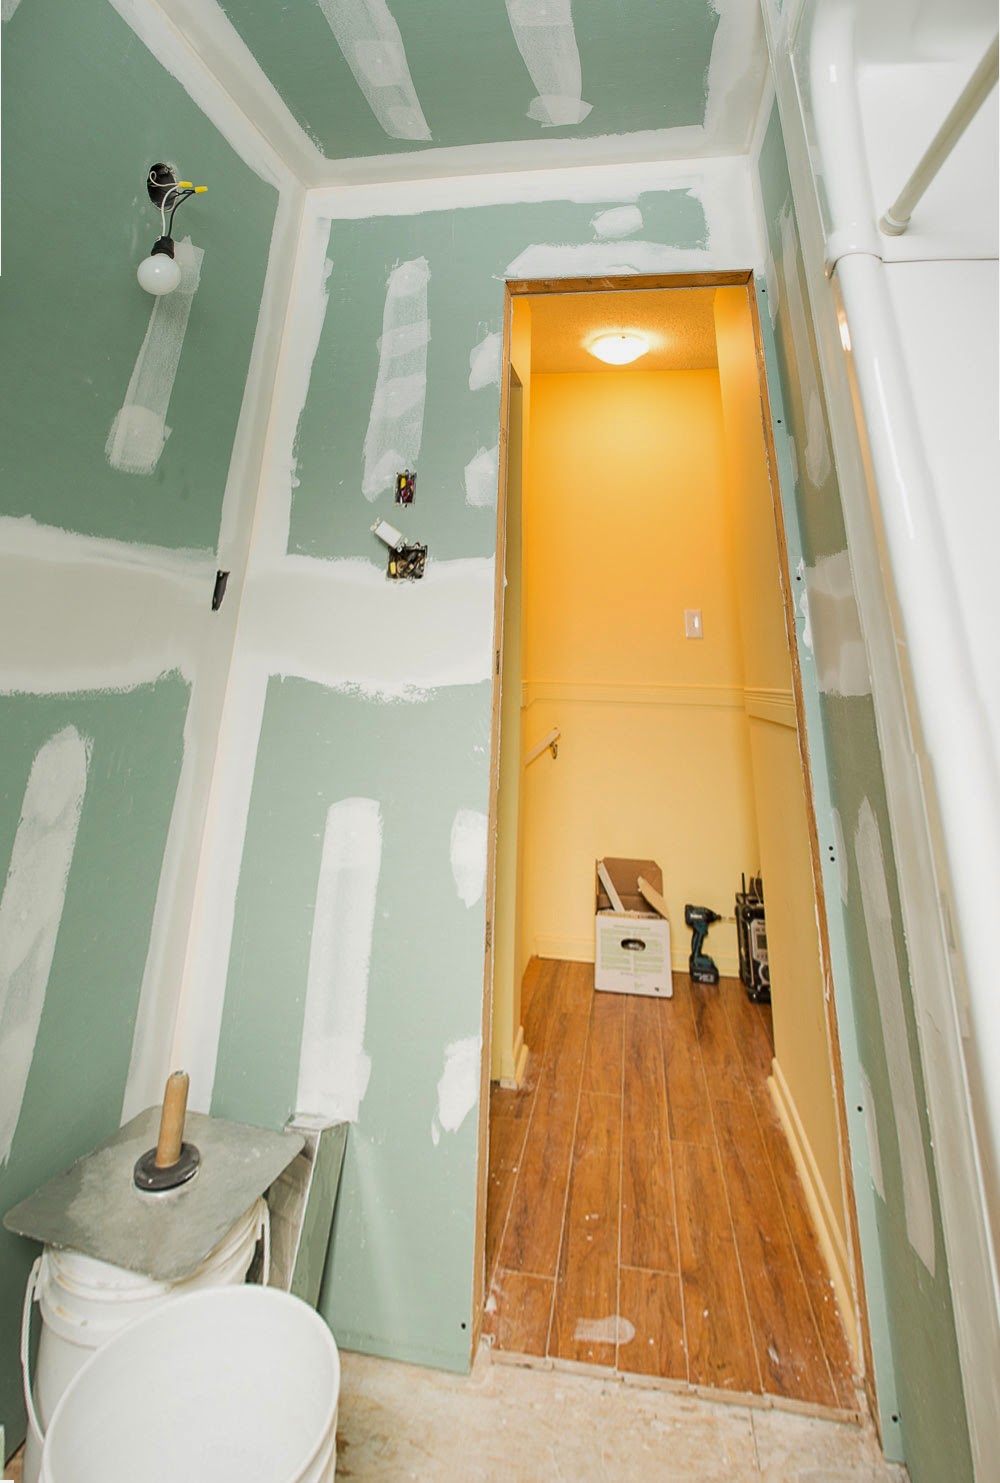 Carpentry Owen Sound Durham Grey County Bathroom Renovation Drywall Taping Painting Flooring Plumbing Renovation